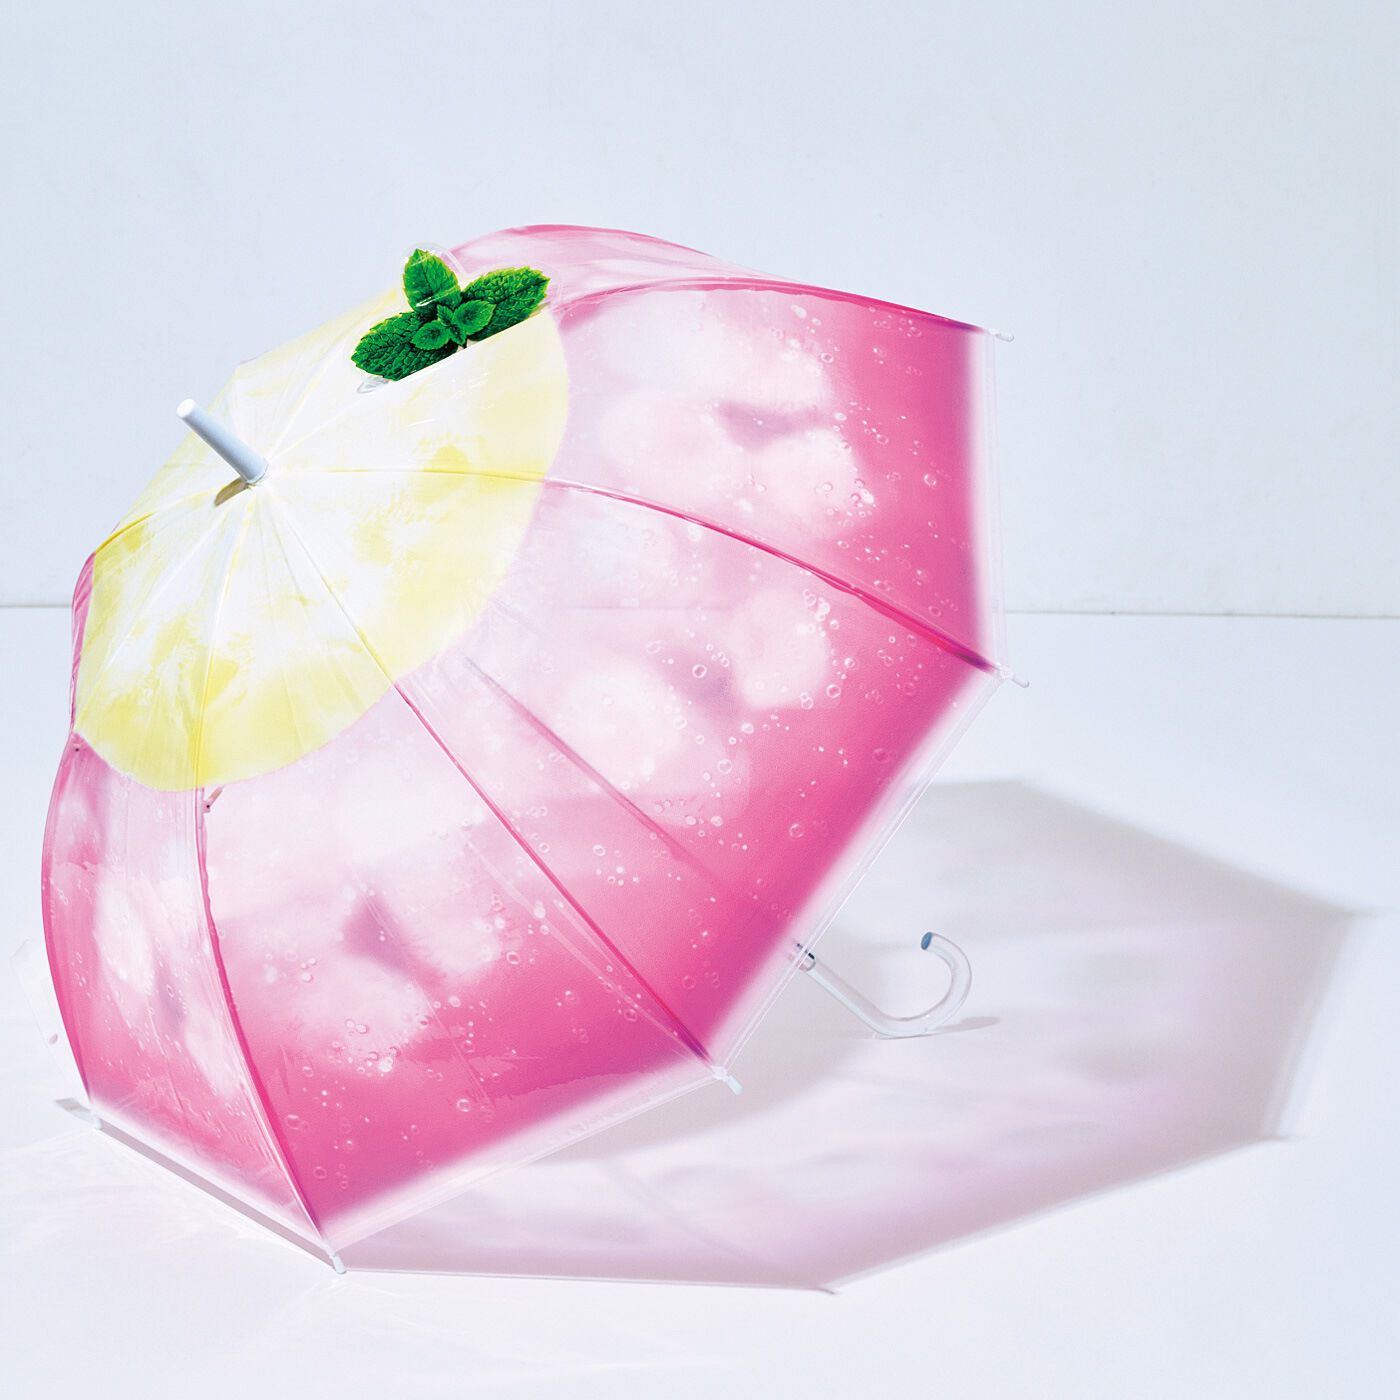 YOU+MORE!|YOU+MORE!　シュワシュワ弾ける クリームソーダの透明傘〈ピンククリームソーダ〉|雨粒がまるでグラスに付いた水滴のよう。